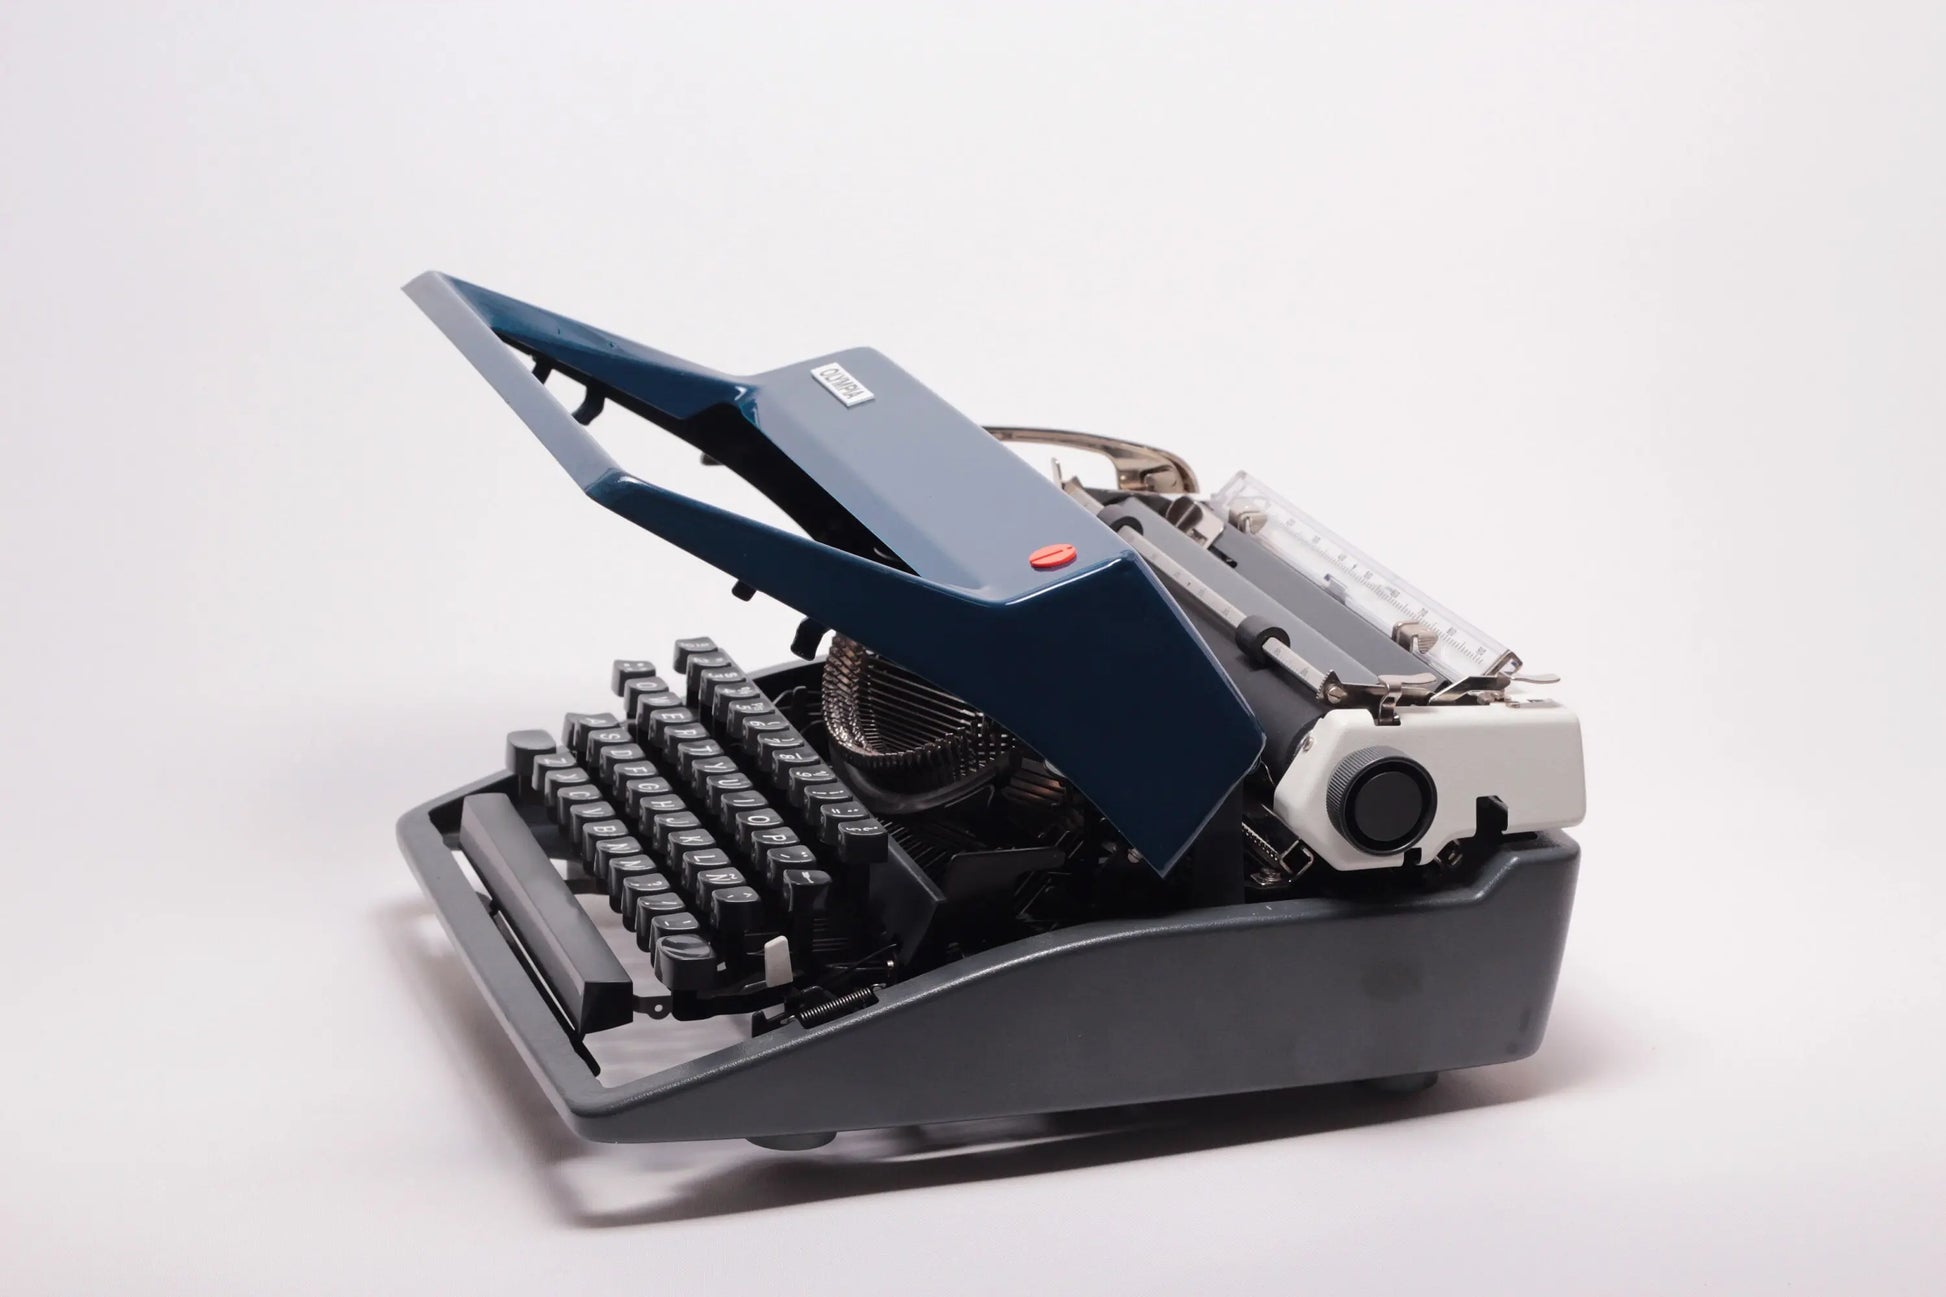 The Best Working typewriter - Olympia  SM - vintage working typewriter - custom made navy blue typewriter - qwerty - ElGranero Typewriter.Company